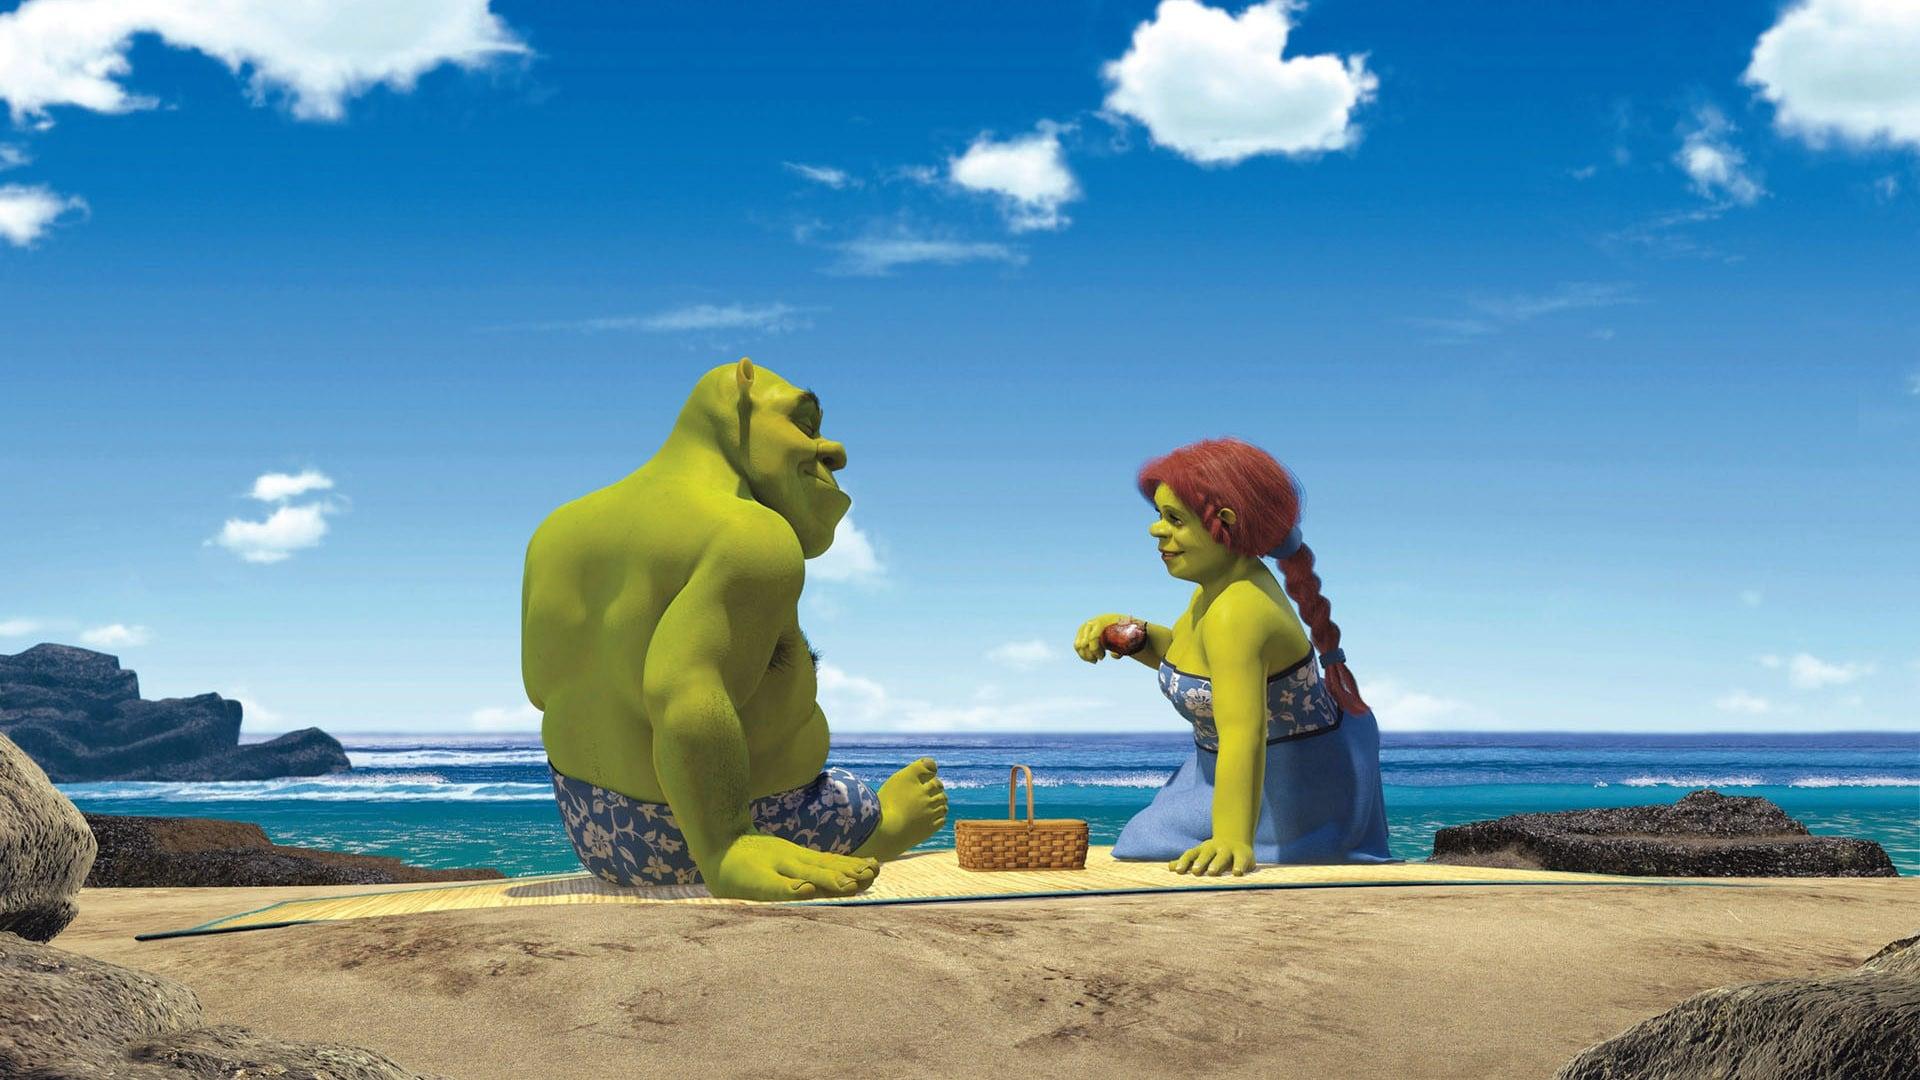 Backdrop Image for Shrek 2